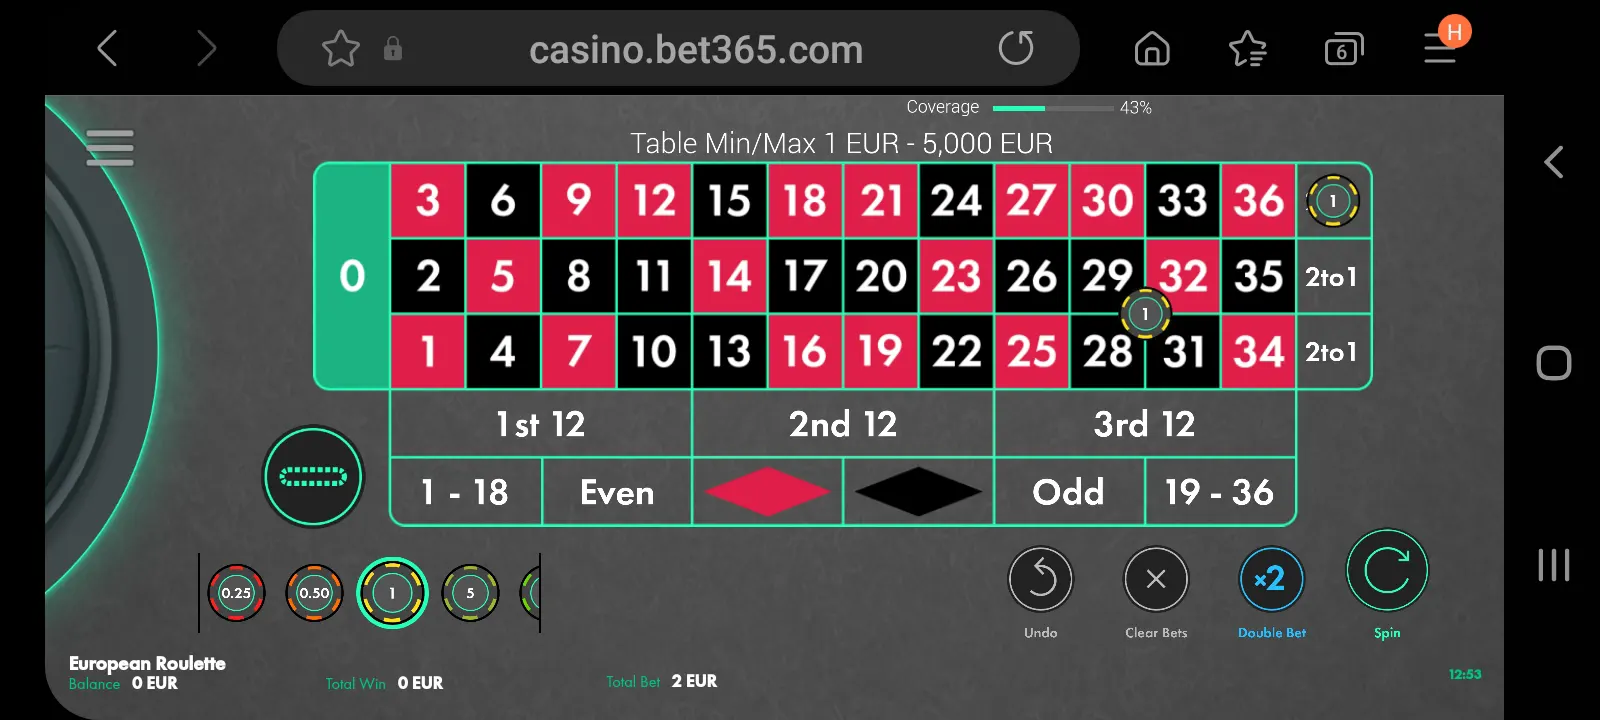 bet365 casino app screenshot 4